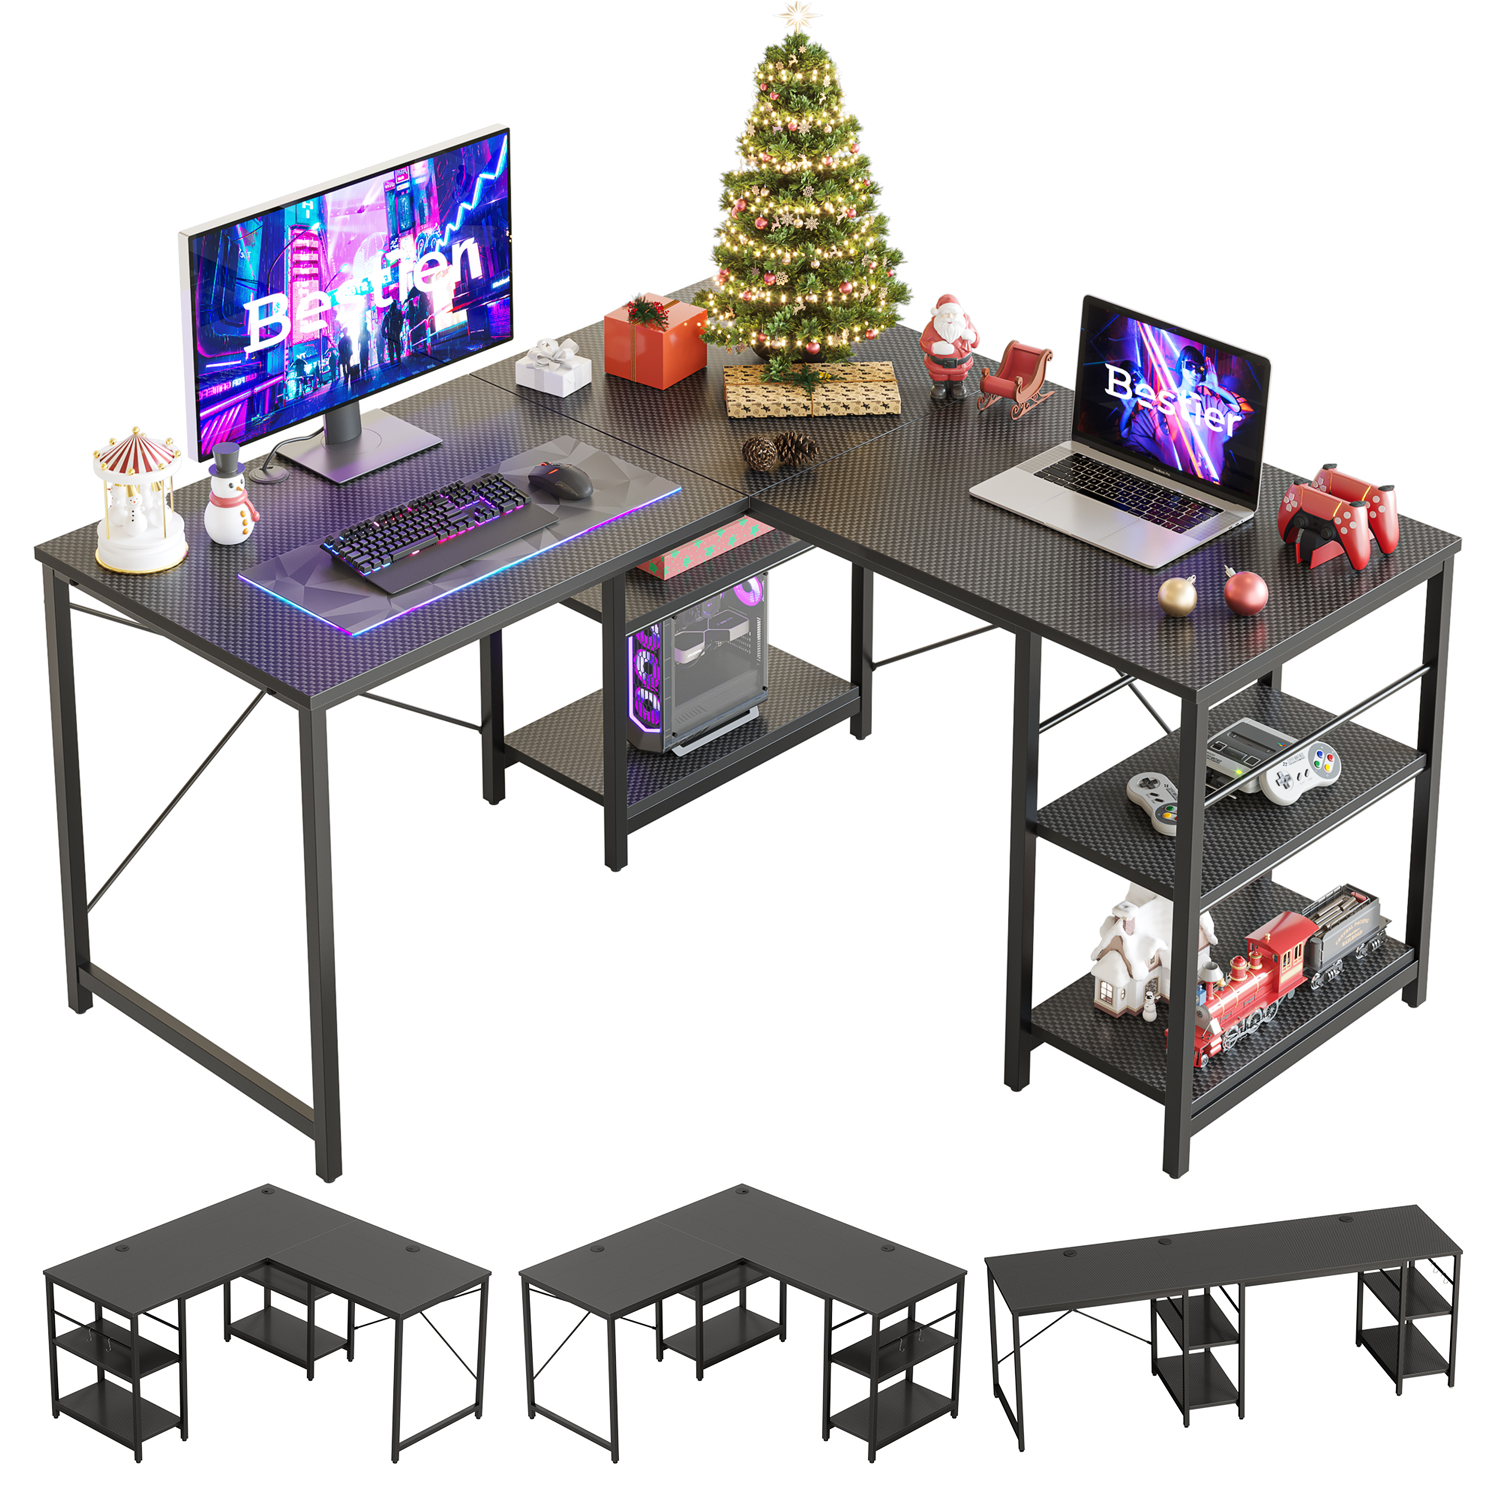 Bestier 86.6 inch L-Shaped Reversible Computer Desk Long Table with Shelves Carbon Fiber Black - image 1 of 10